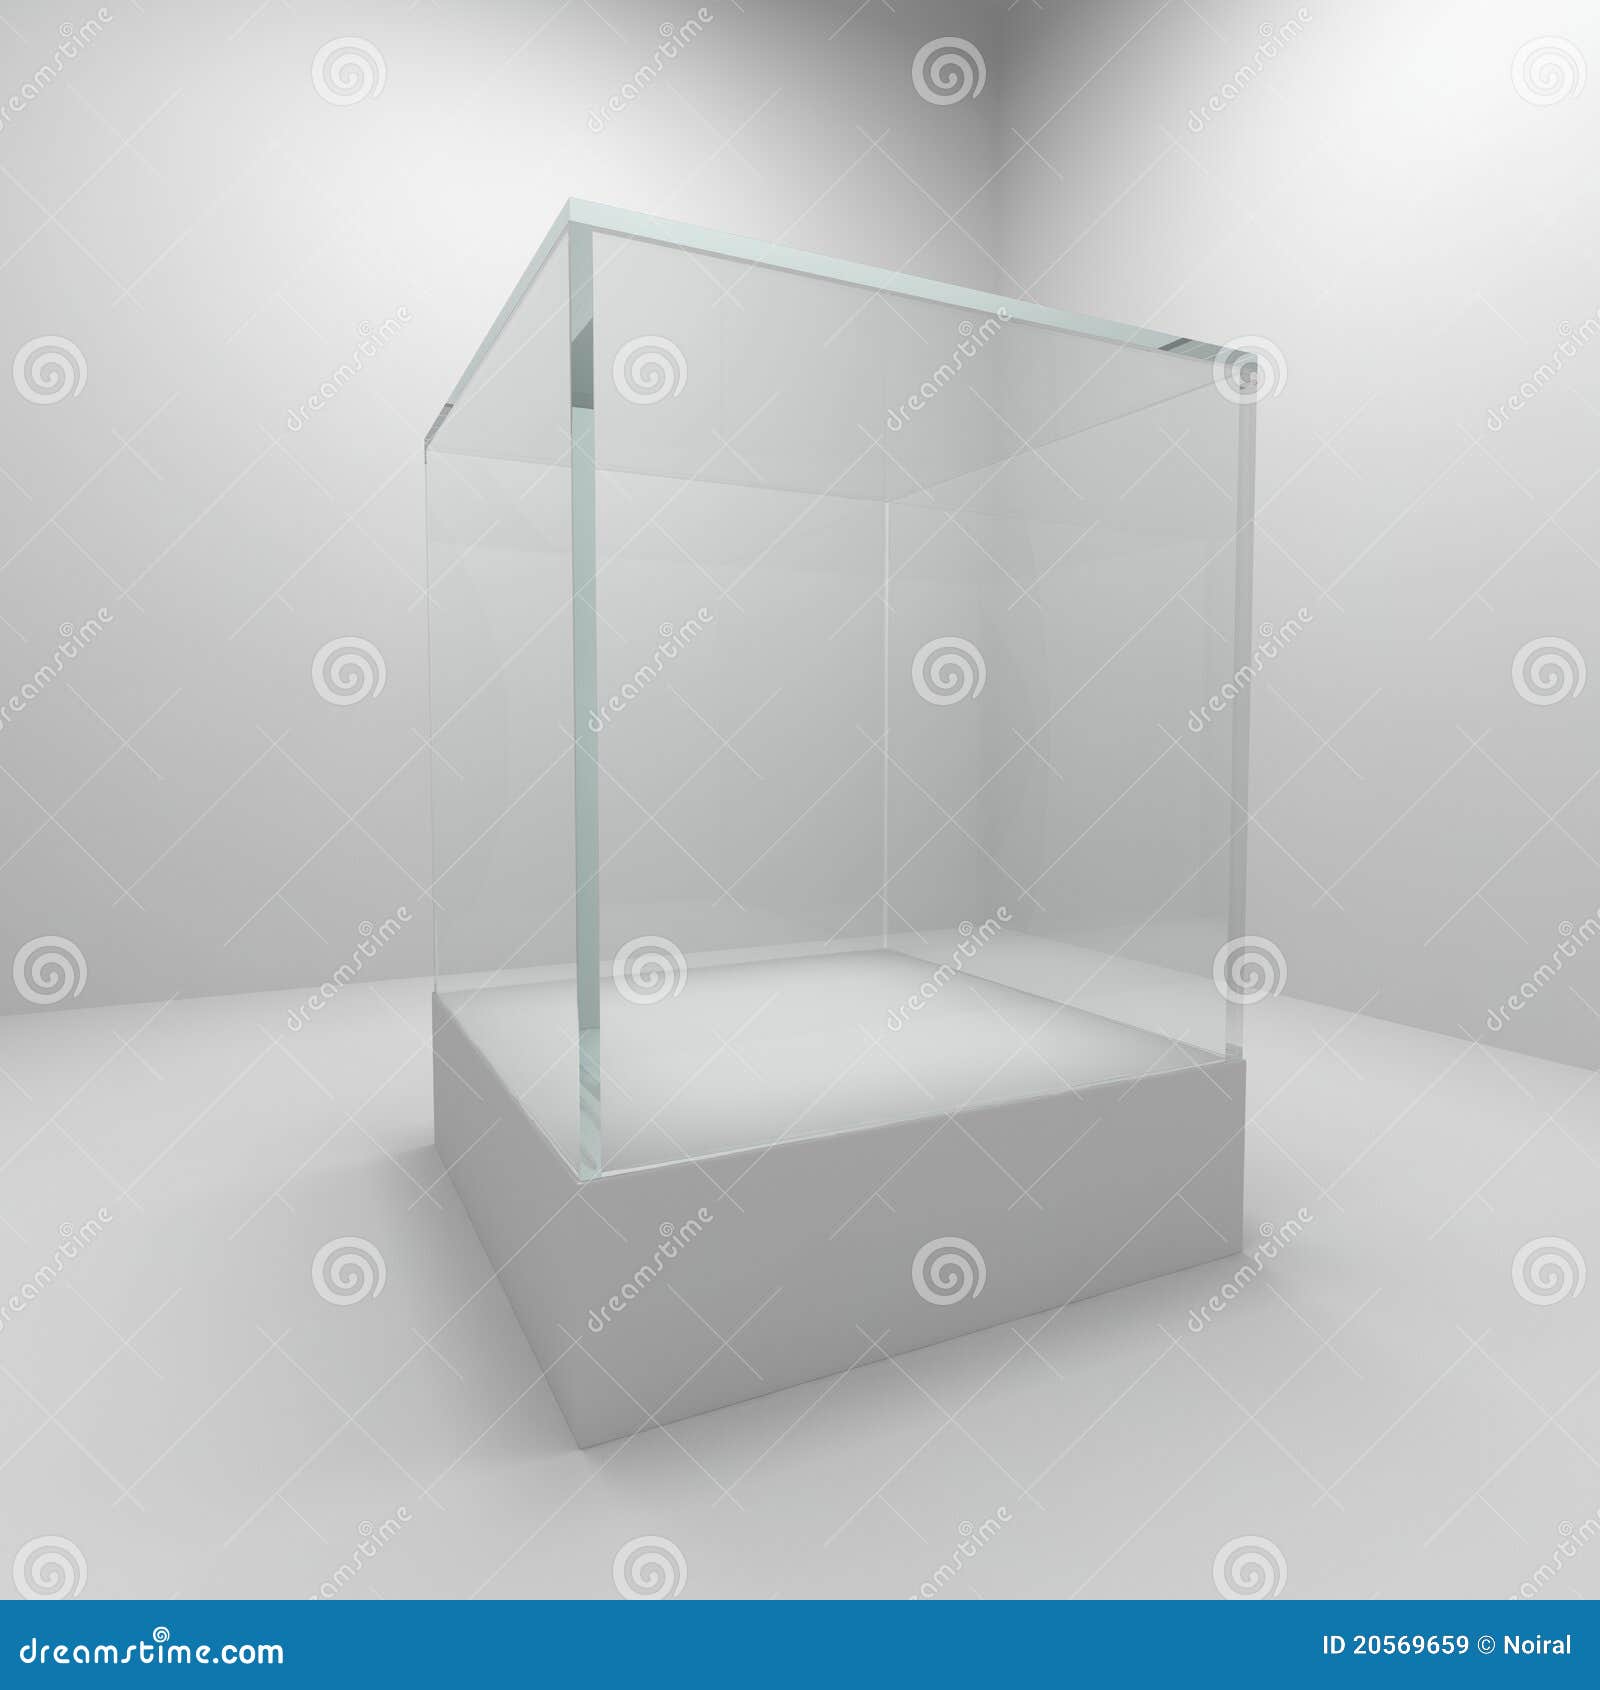 empty glass showcase